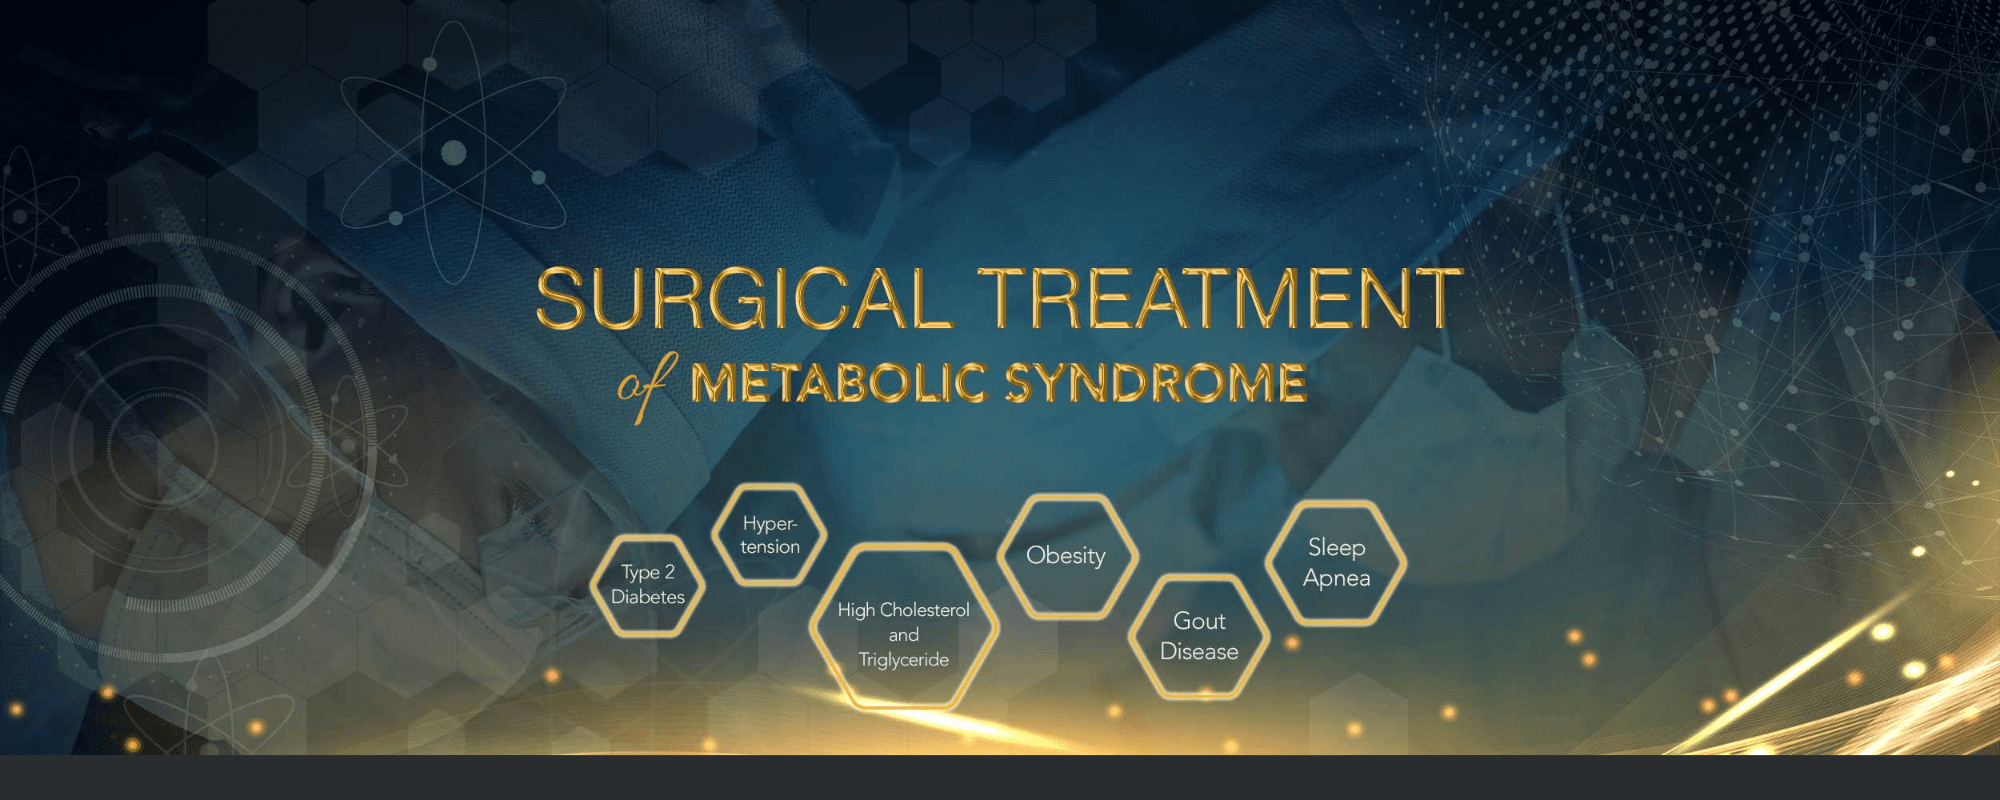 Metabolic Surgery